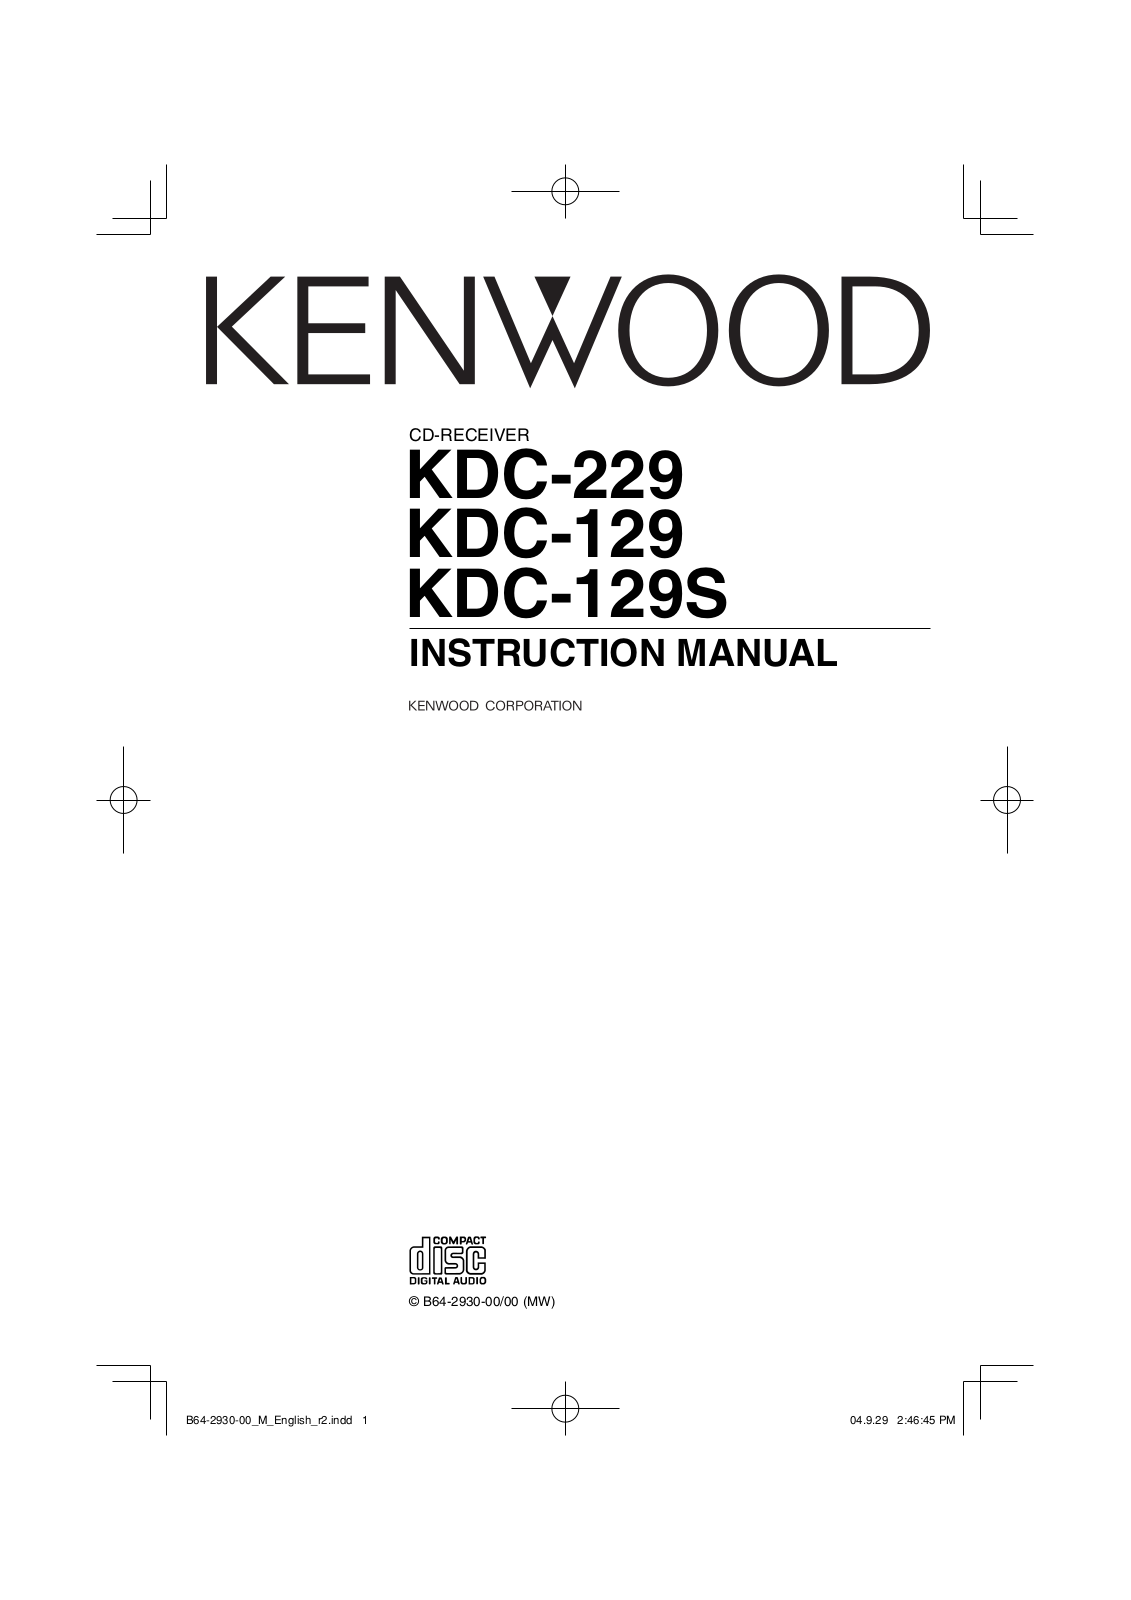 Kenwood KDC-129, KDC-129S, kdc 229 User Manual